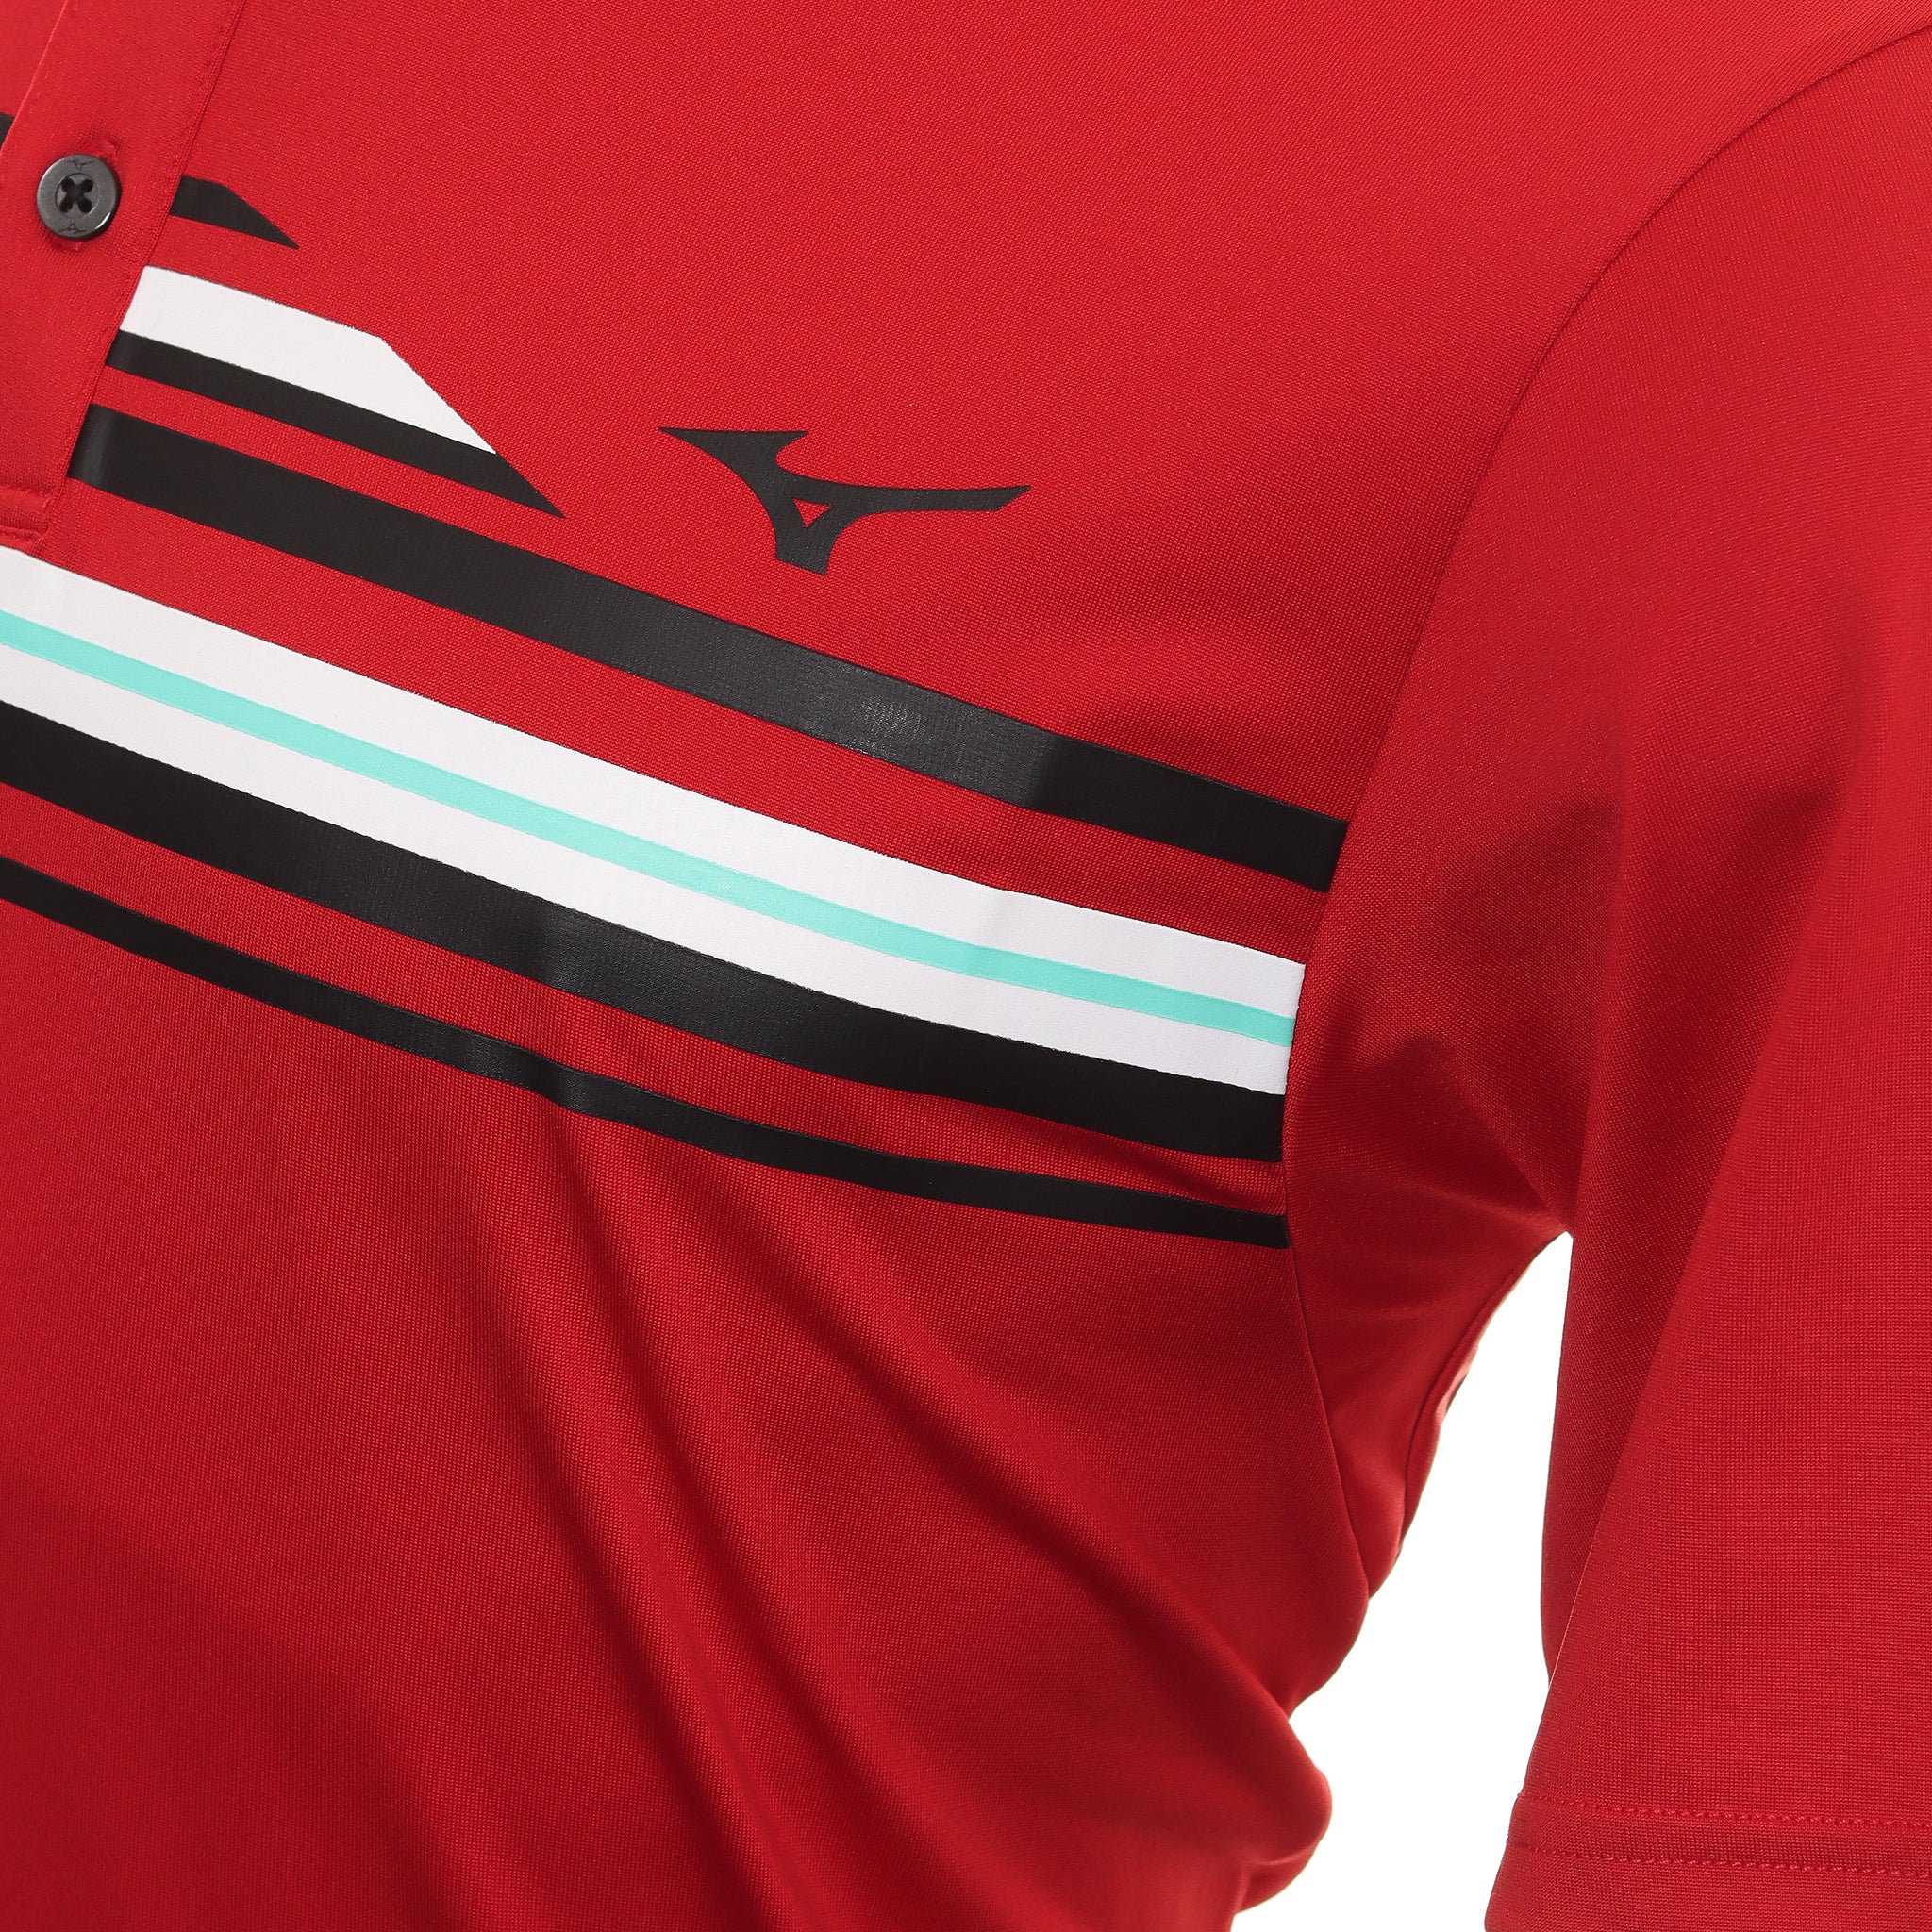 mizuno-golf-quick-dry-elite-stripe-shirt-52ga2007-red-62